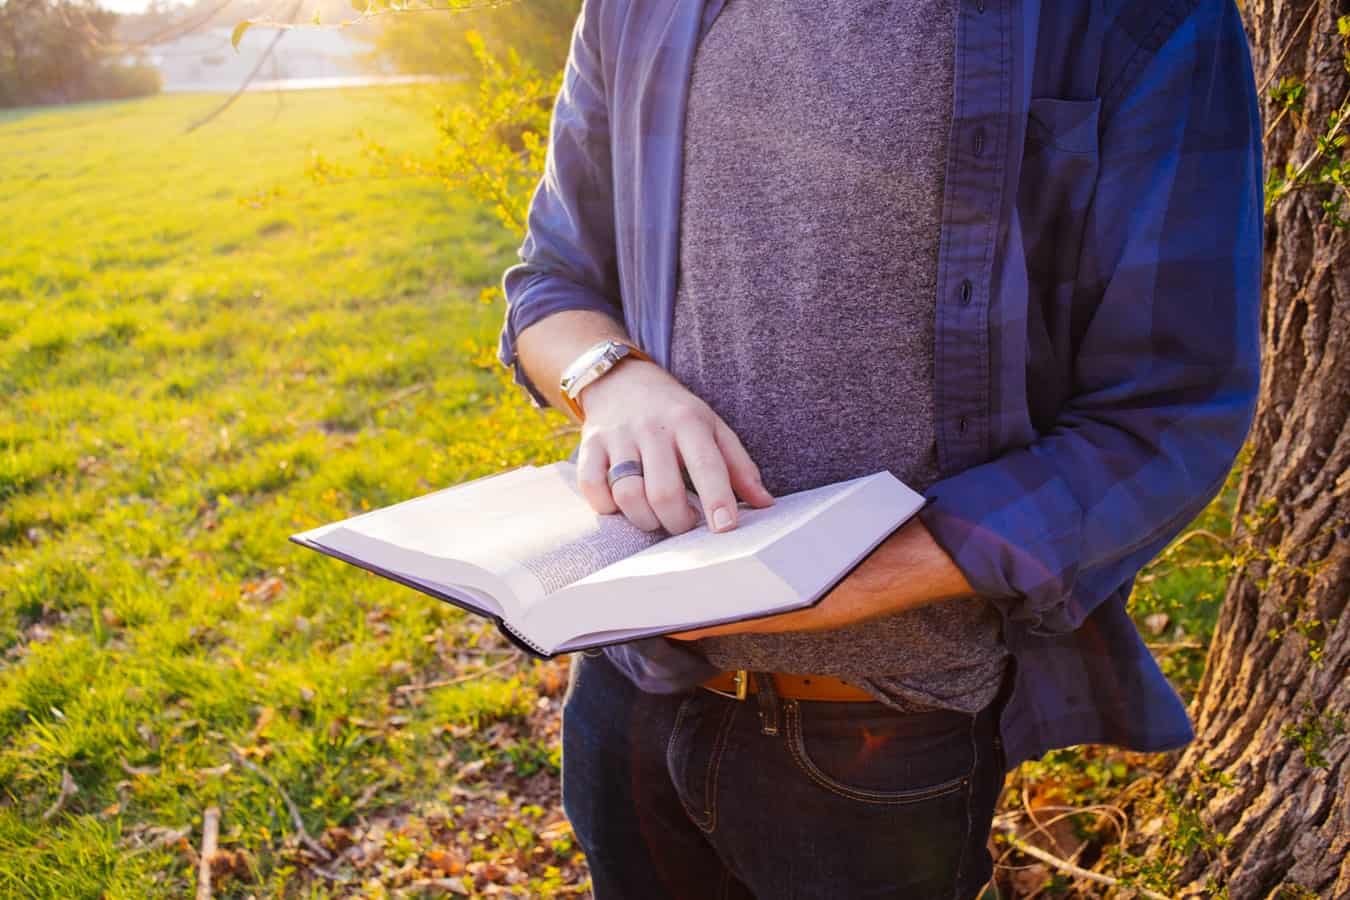 A man is reading a book in a garden